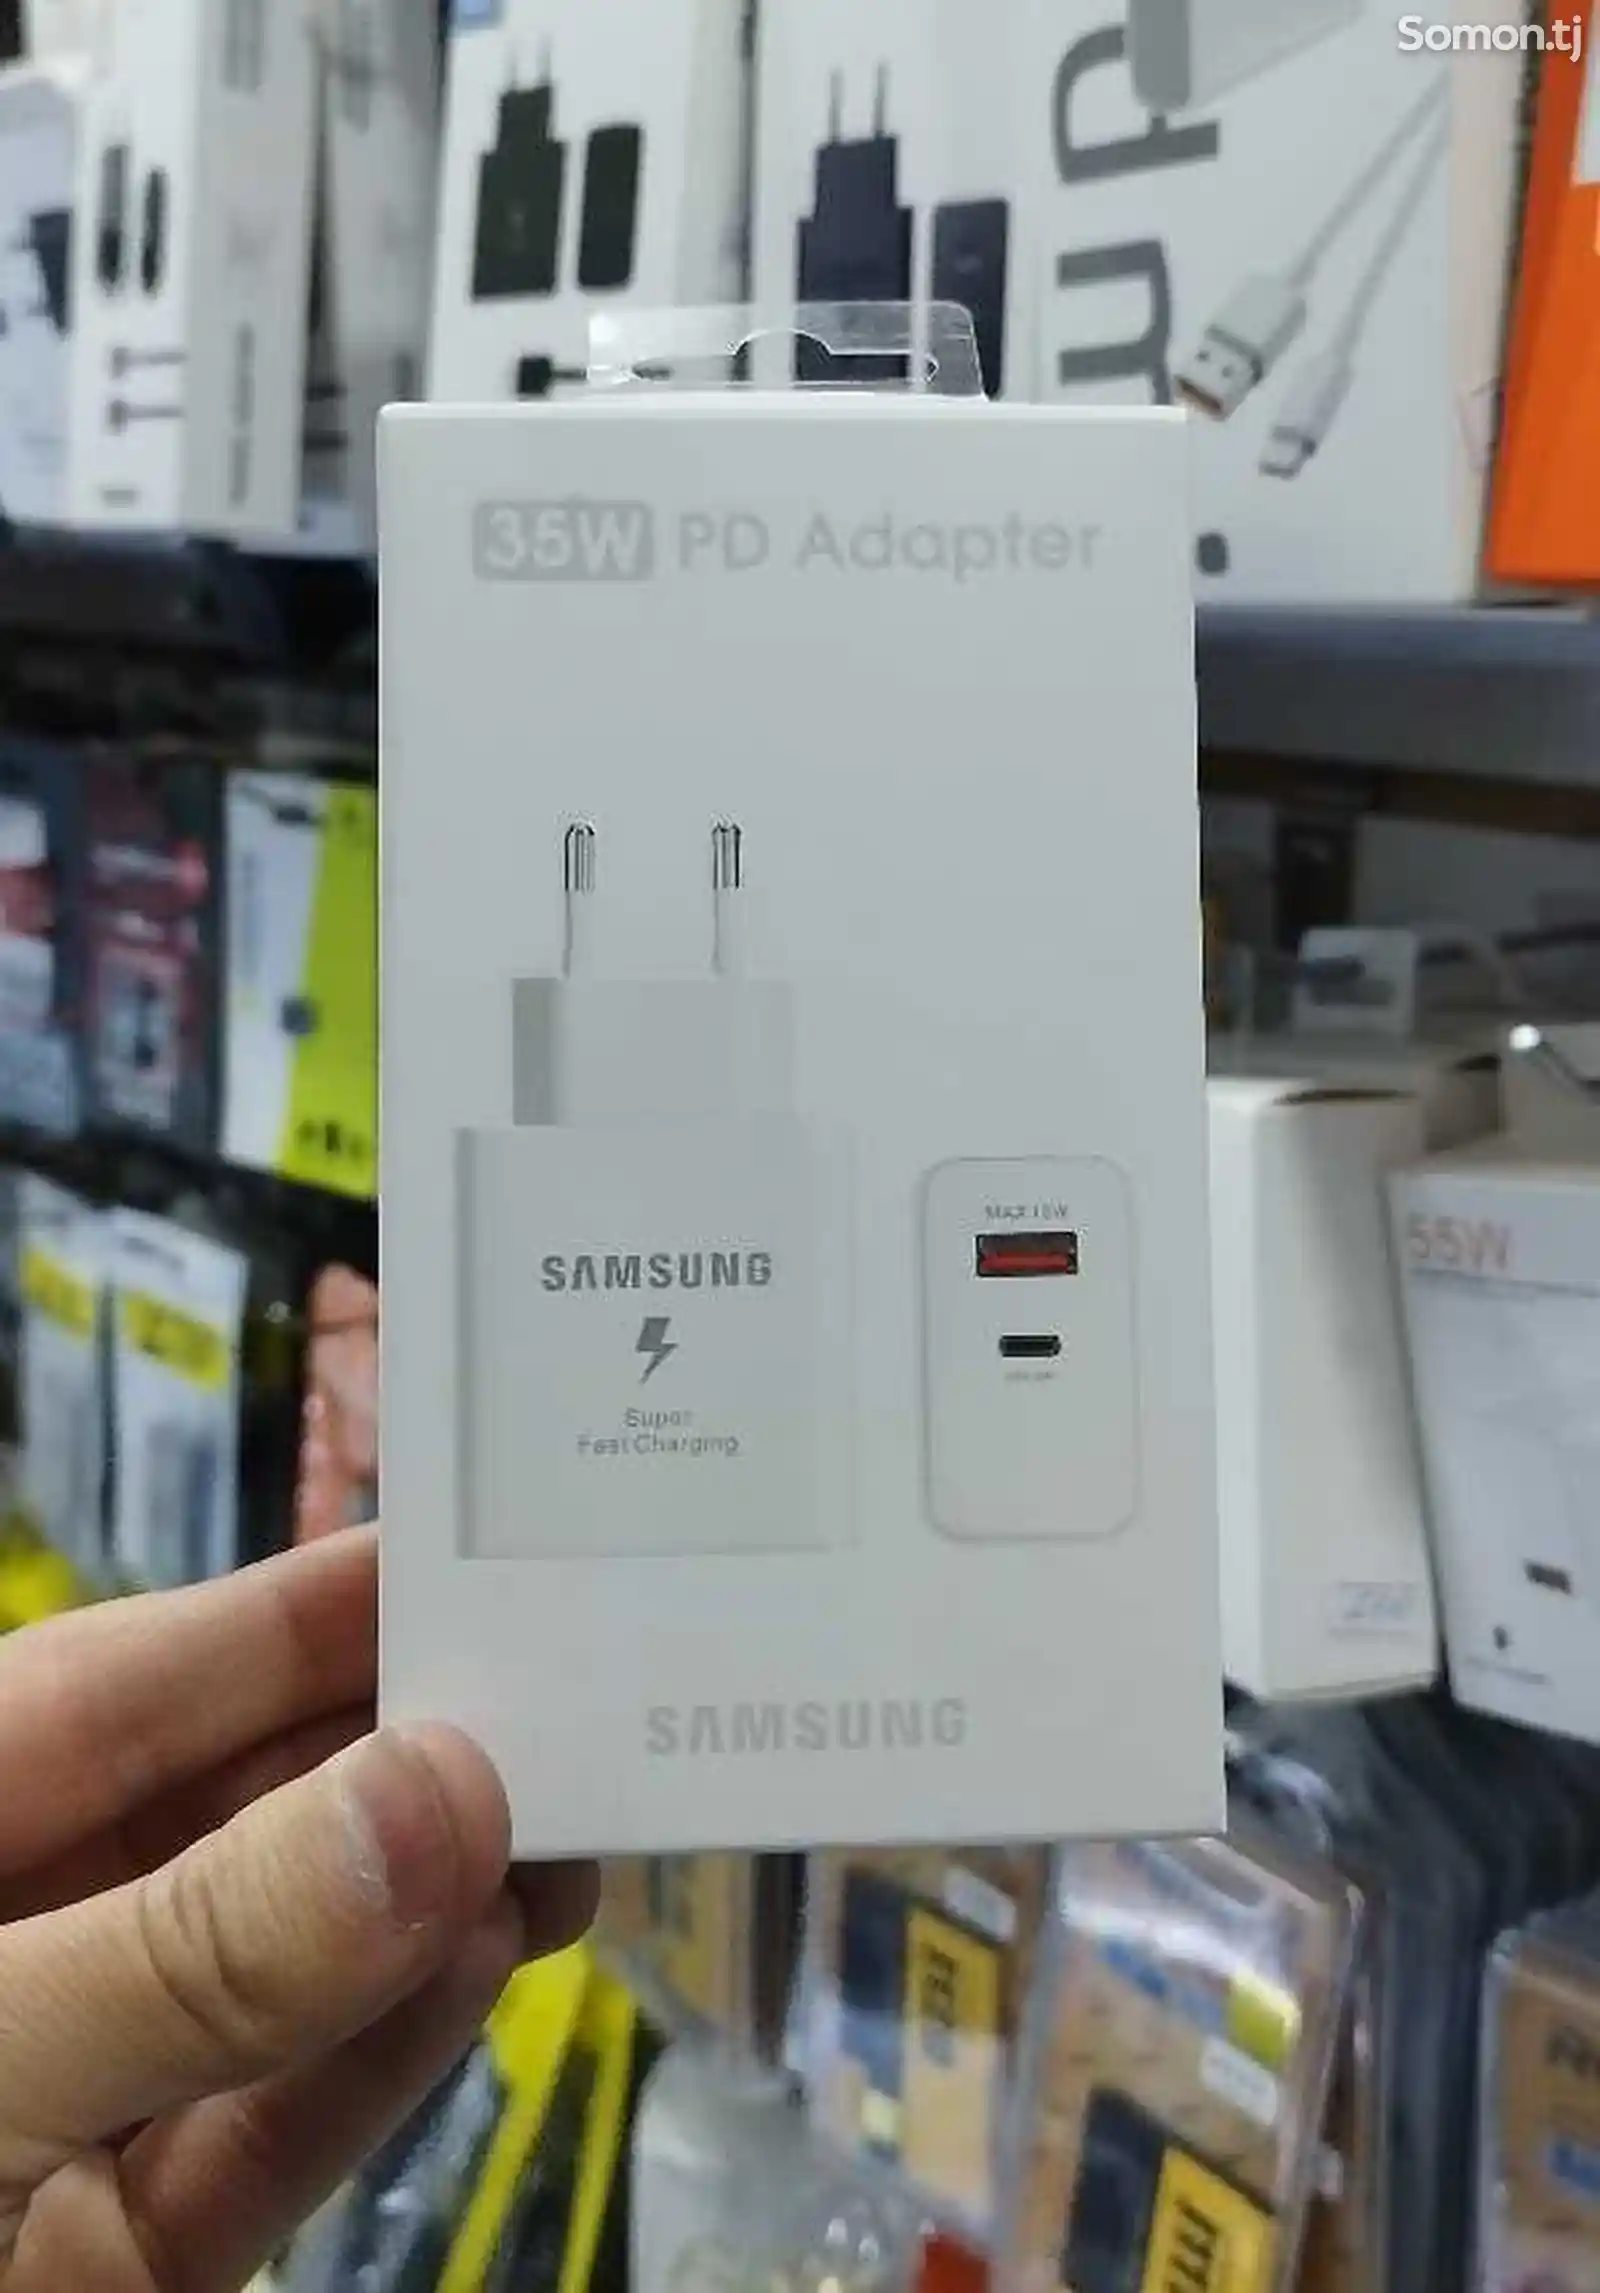 35W PD Adapter Samsung-2